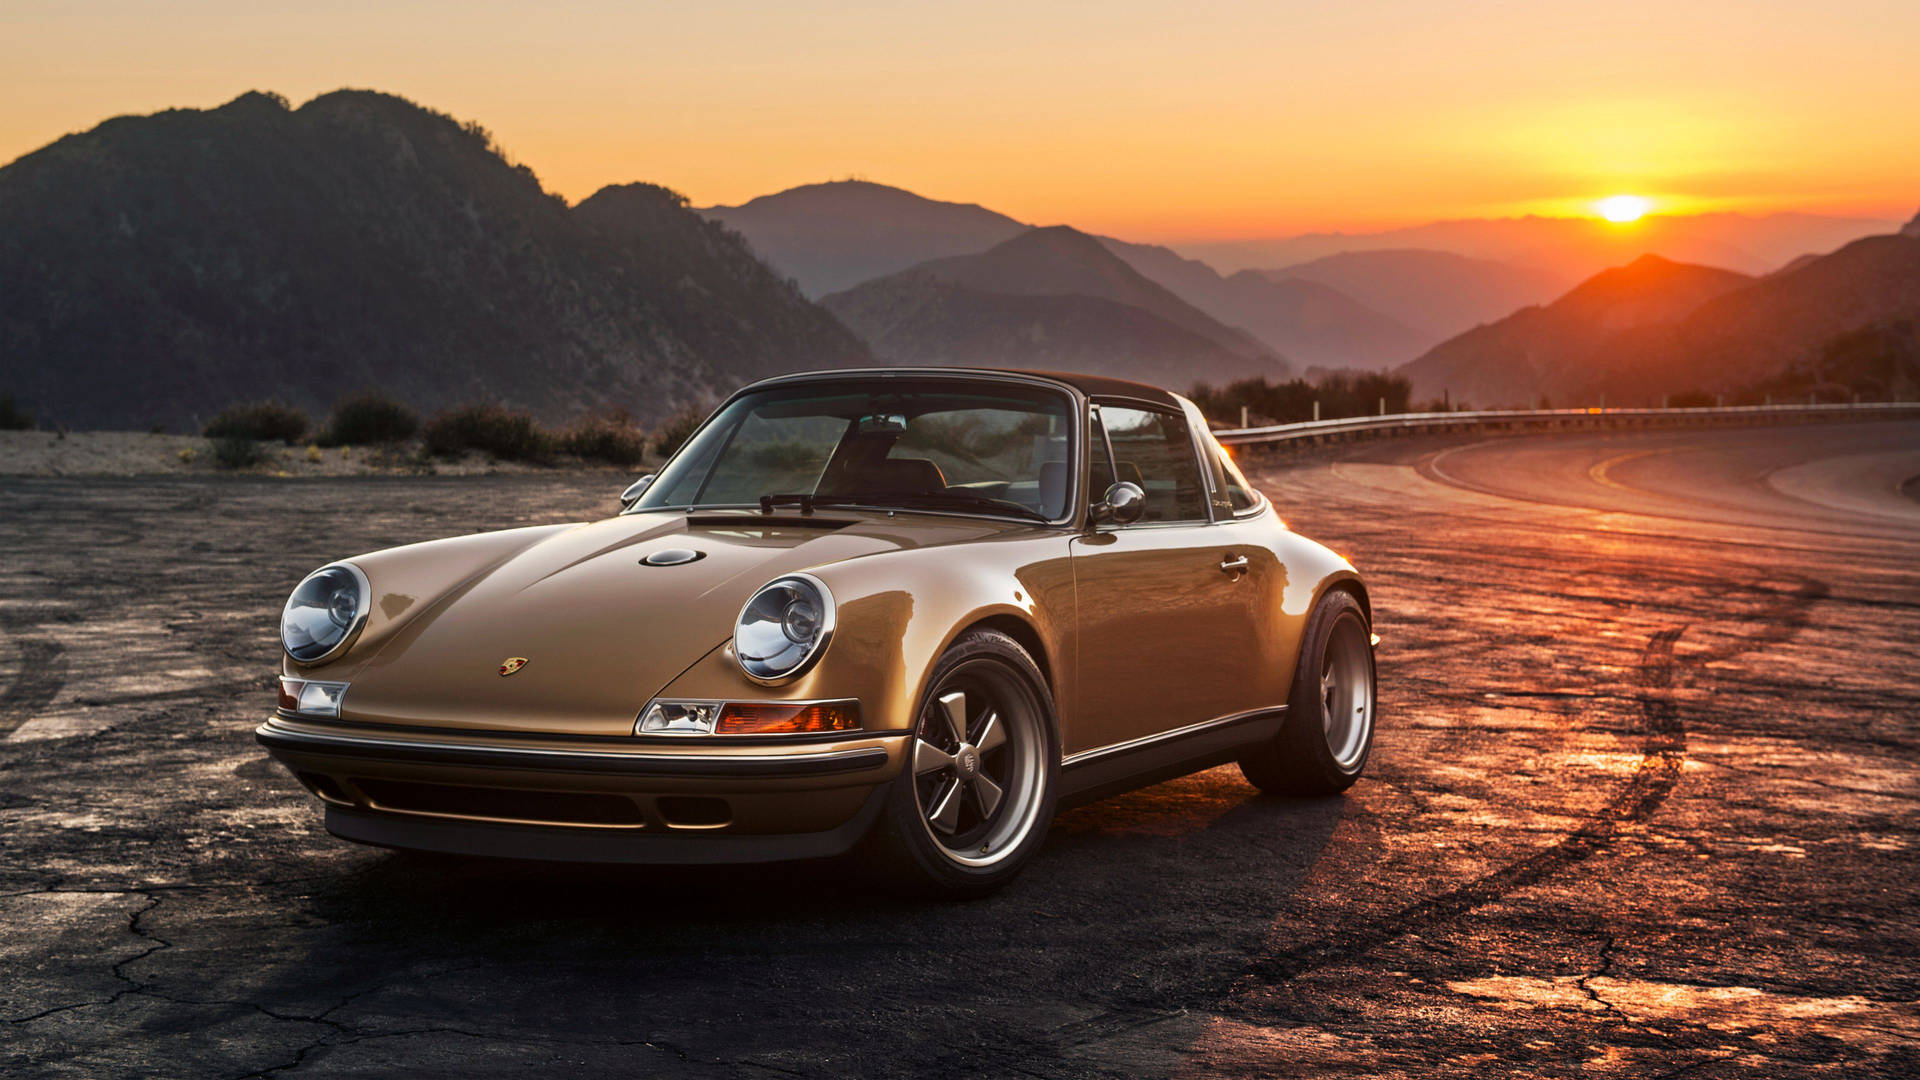 Porsche 911 And Sunset Background